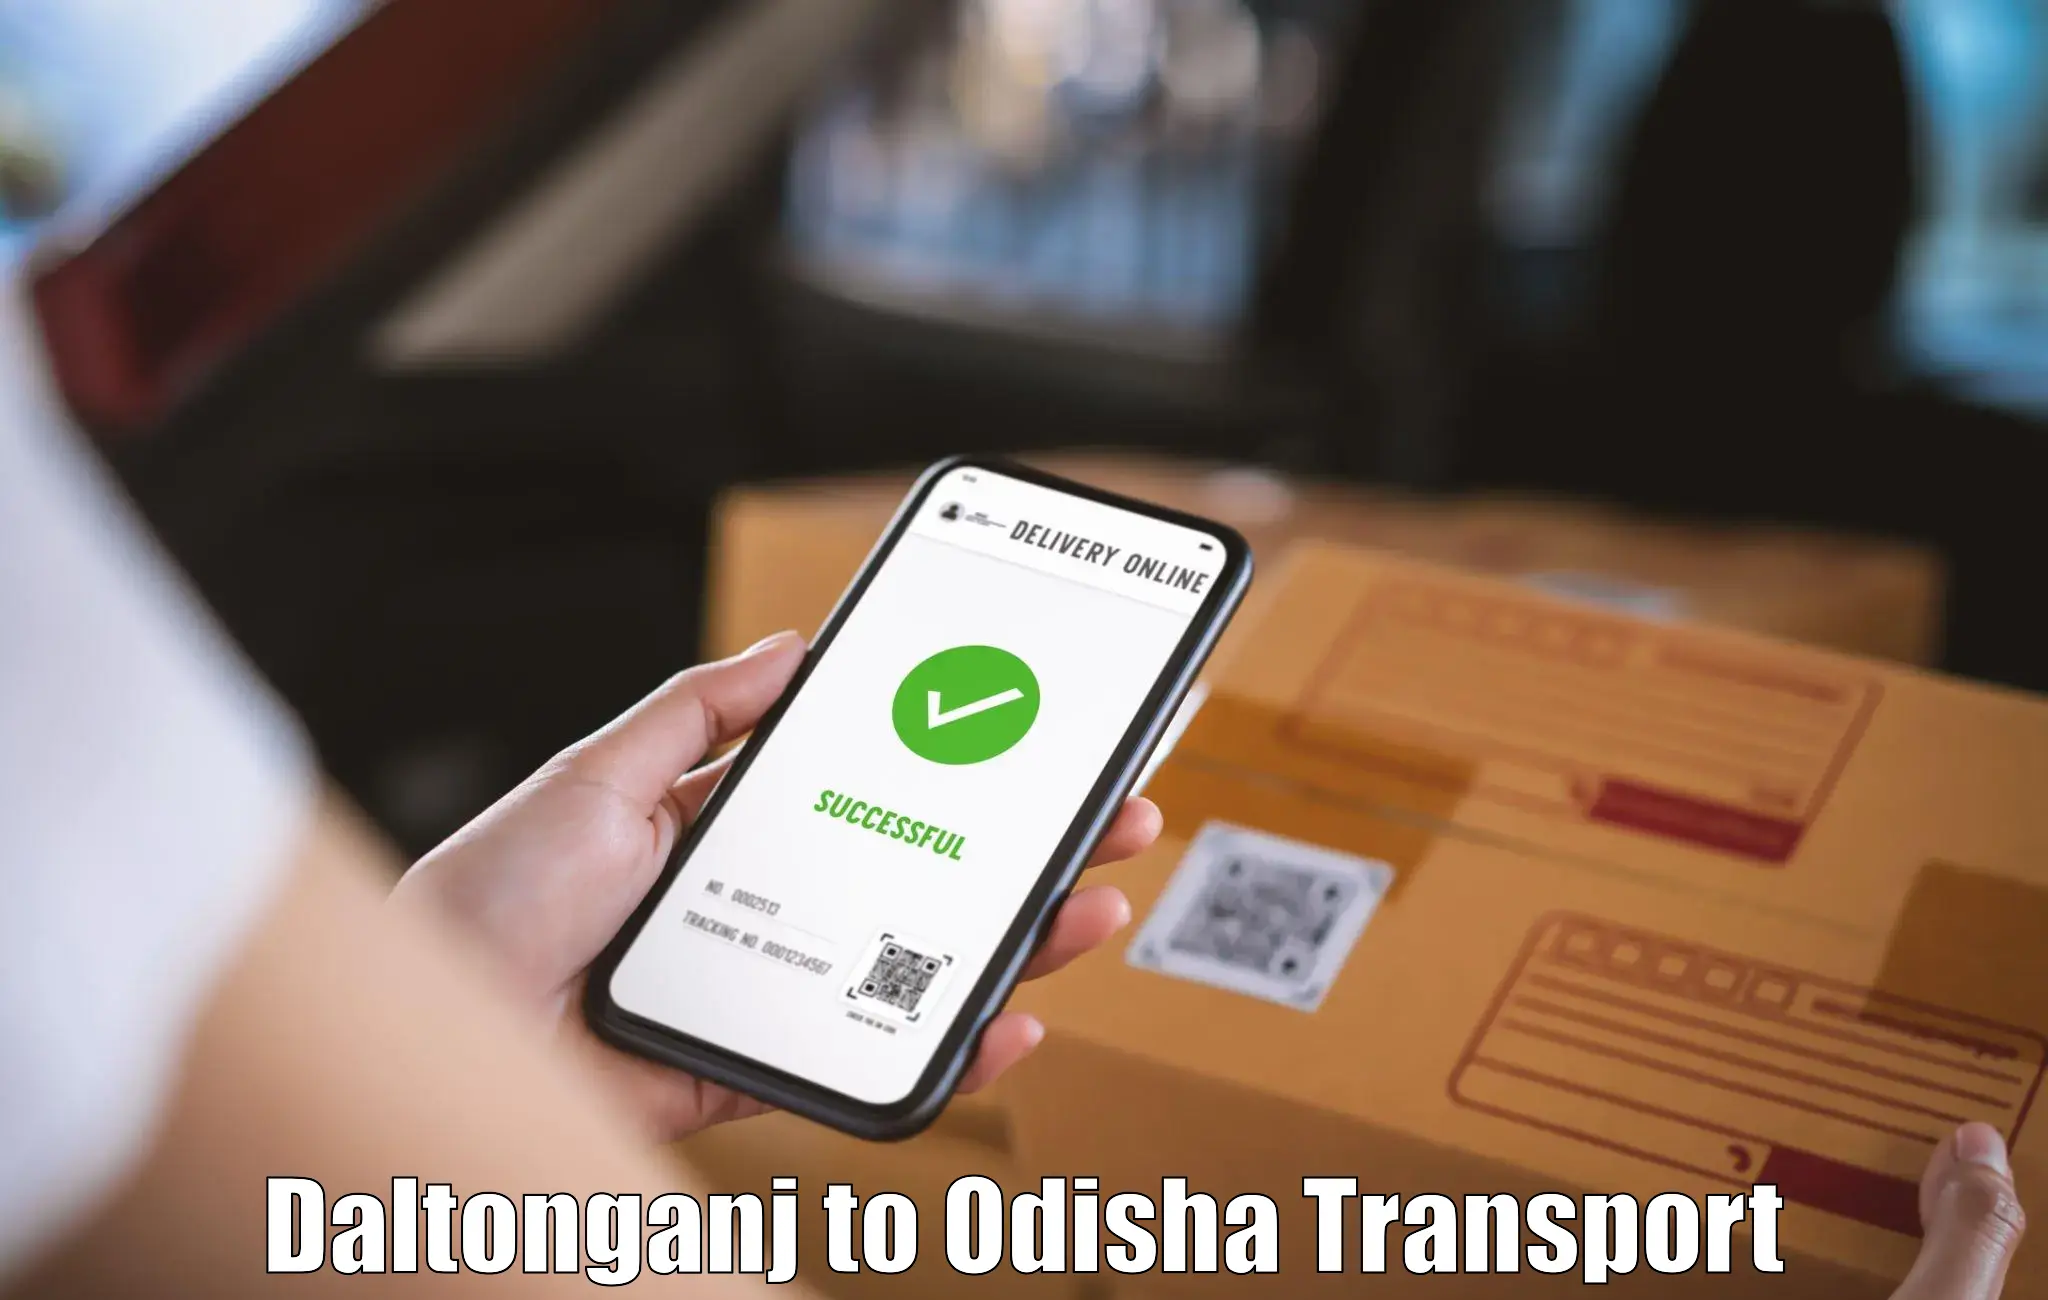 Container transport service Daltonganj to Odisha